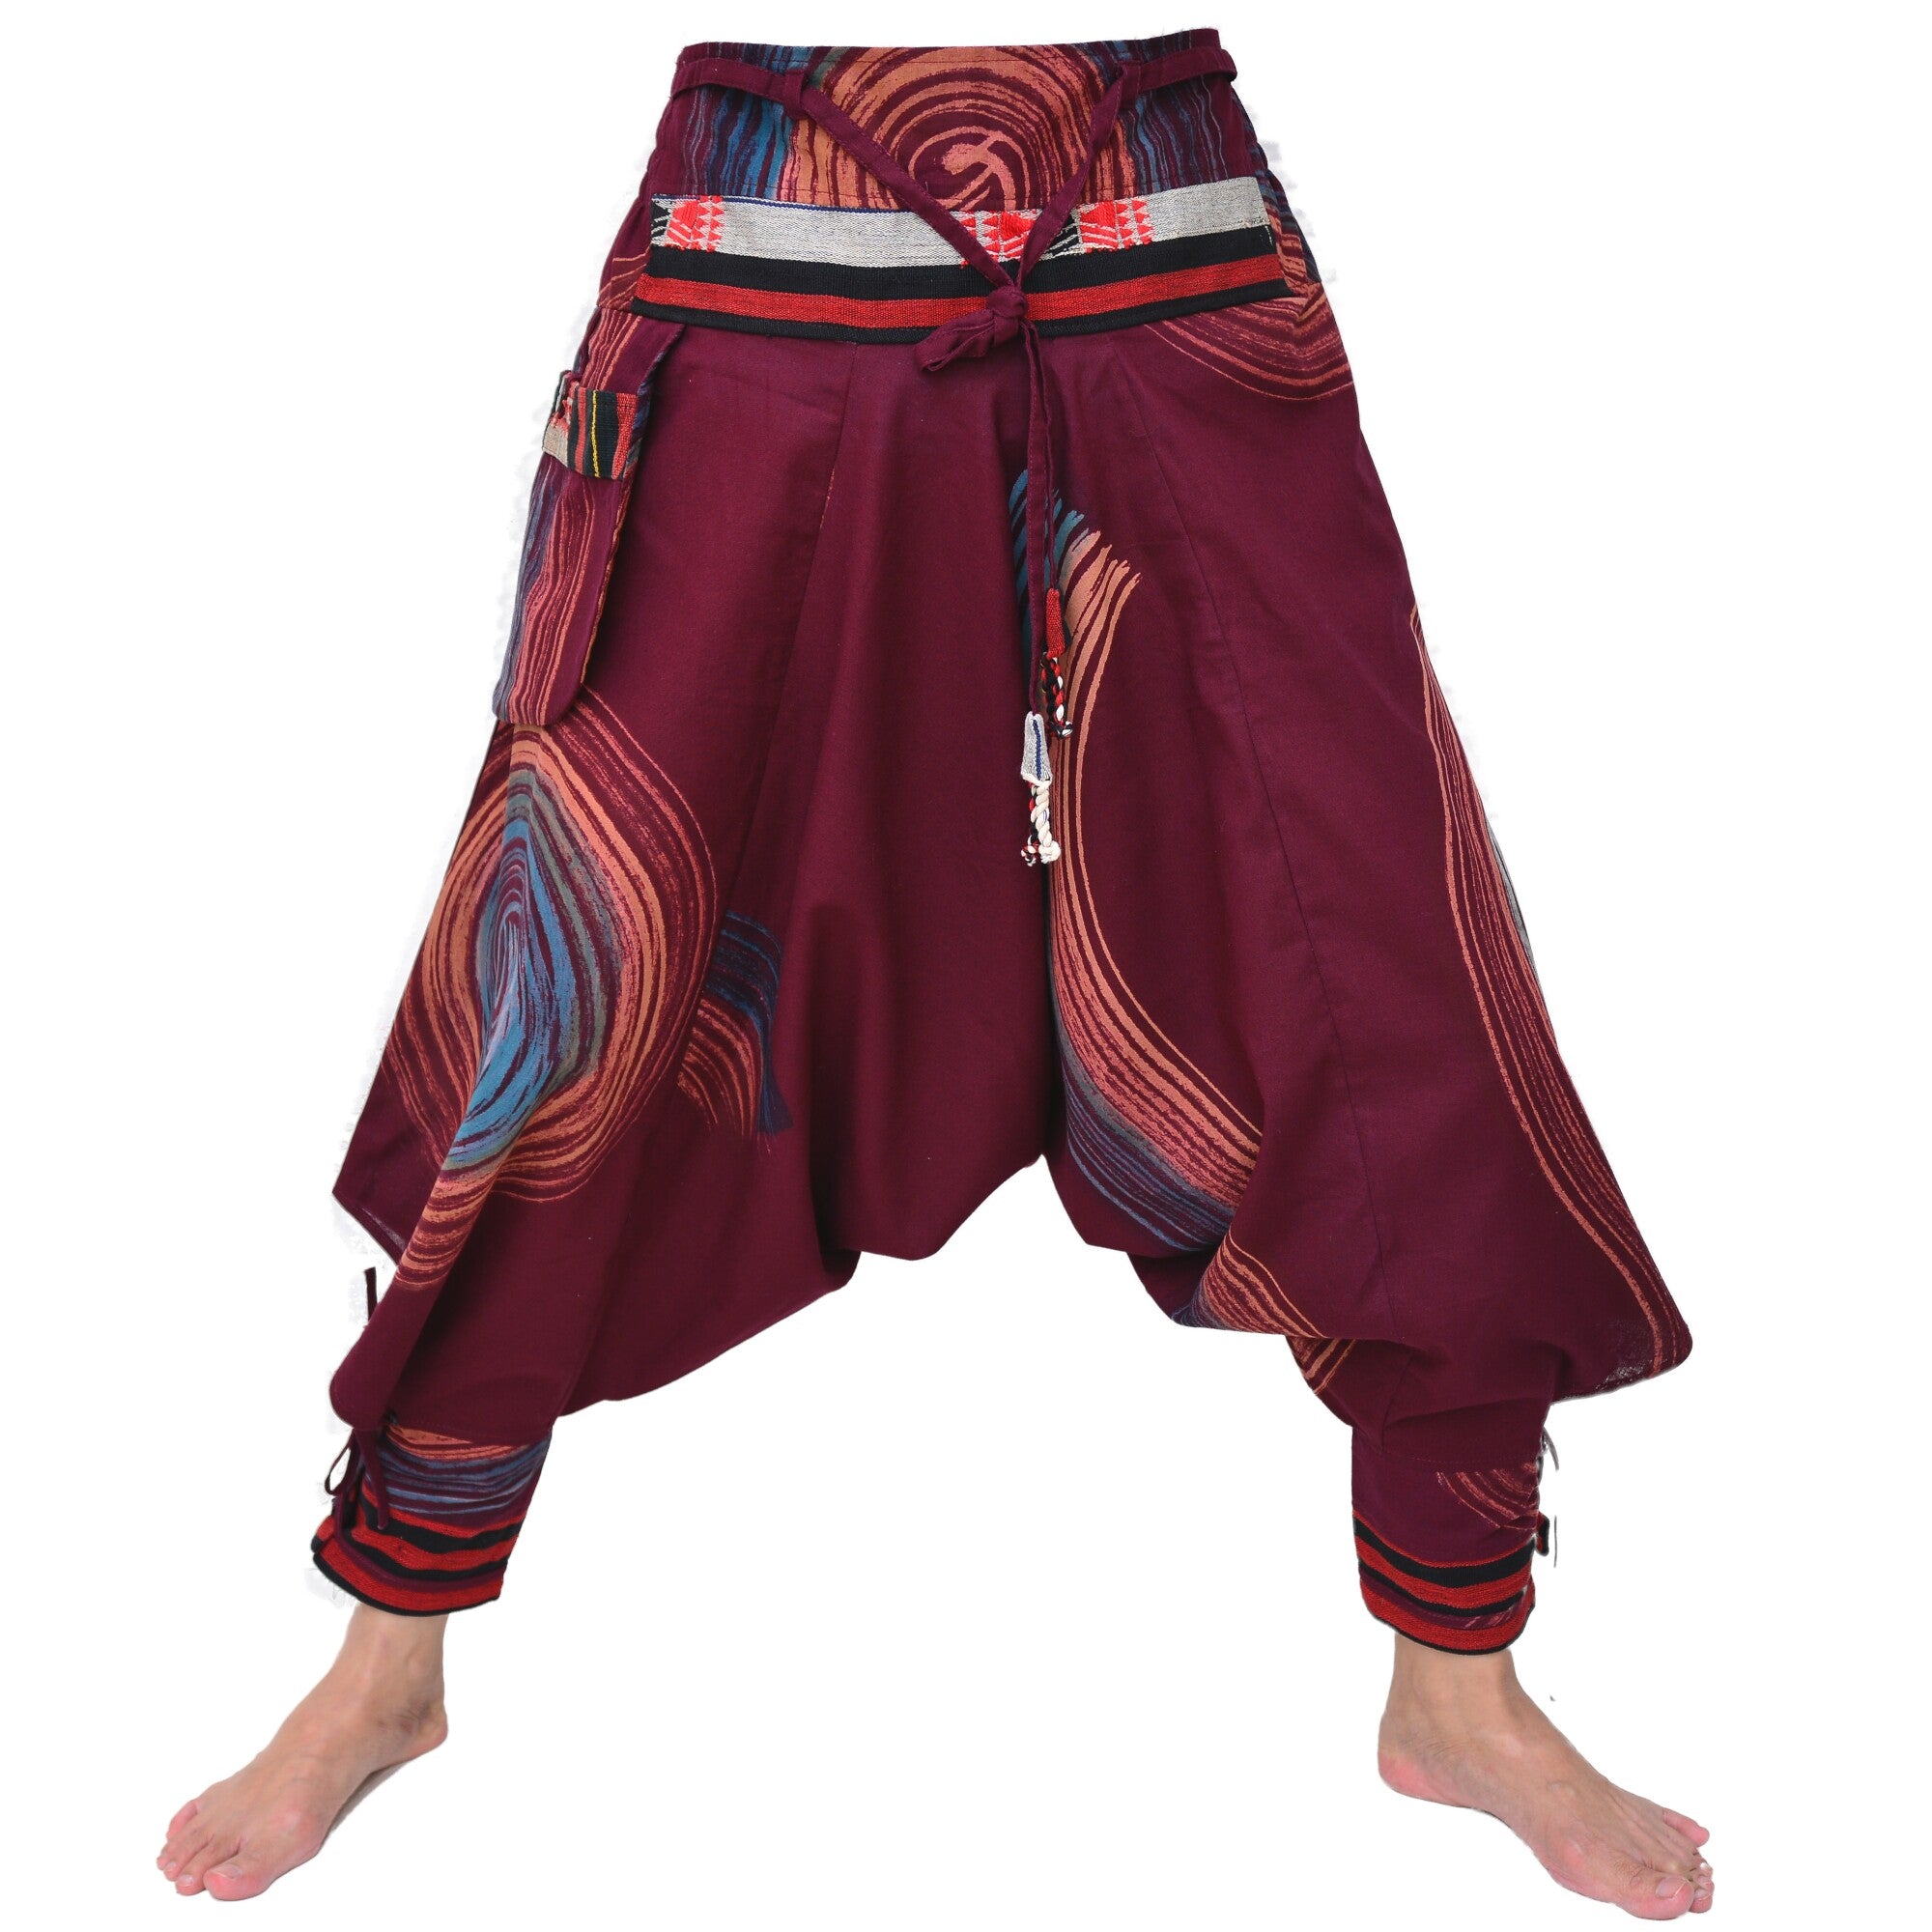 Harem Pants Men, Samurai Pants, Cotton Pants, Burning Man Costumes